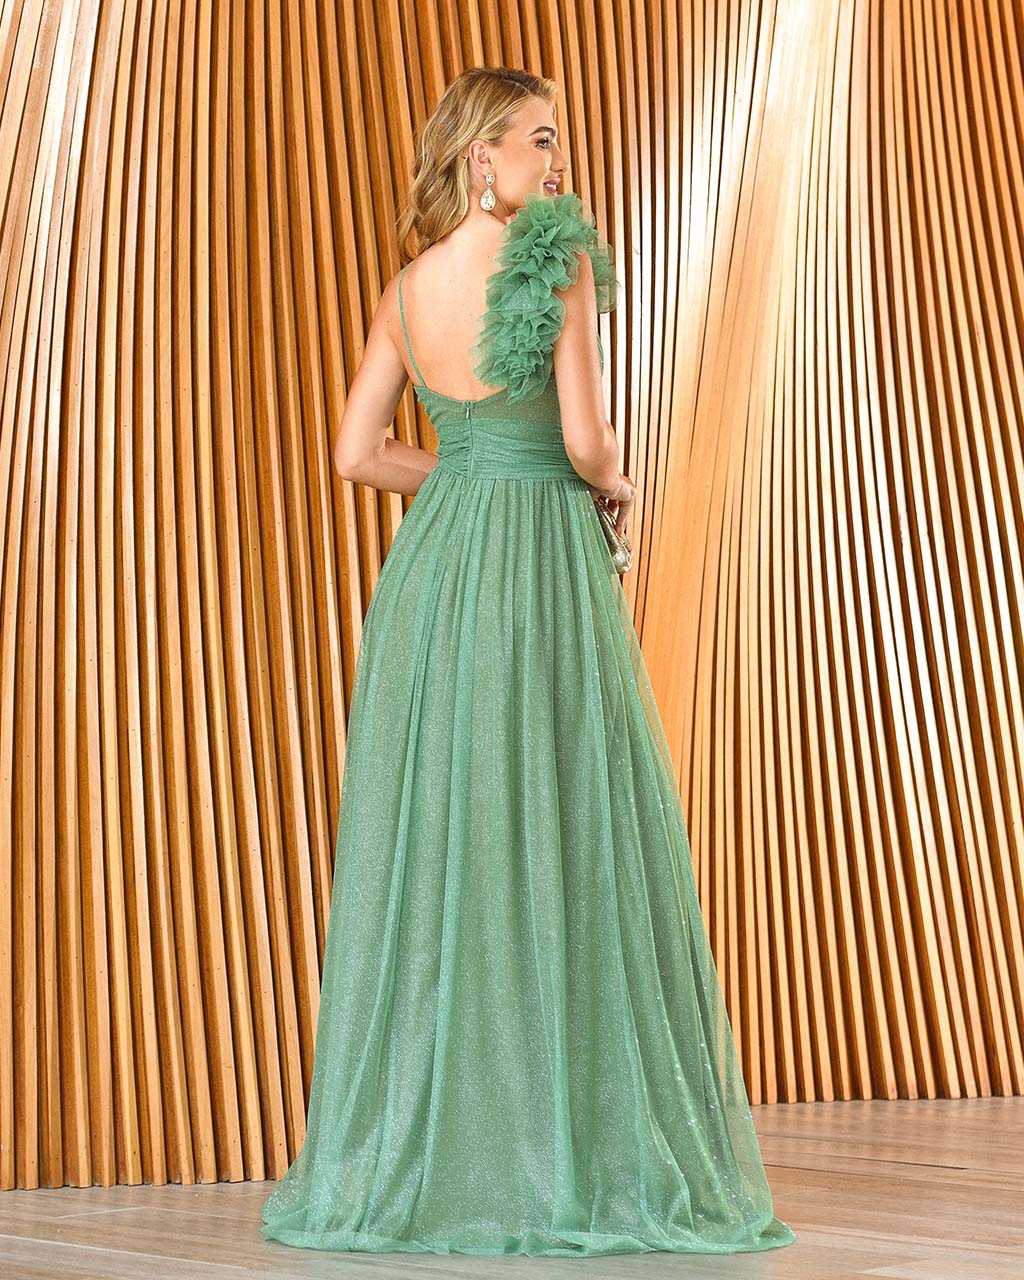 Vestido Longo Verde Oliva em Tule Liliane  - Empório NM